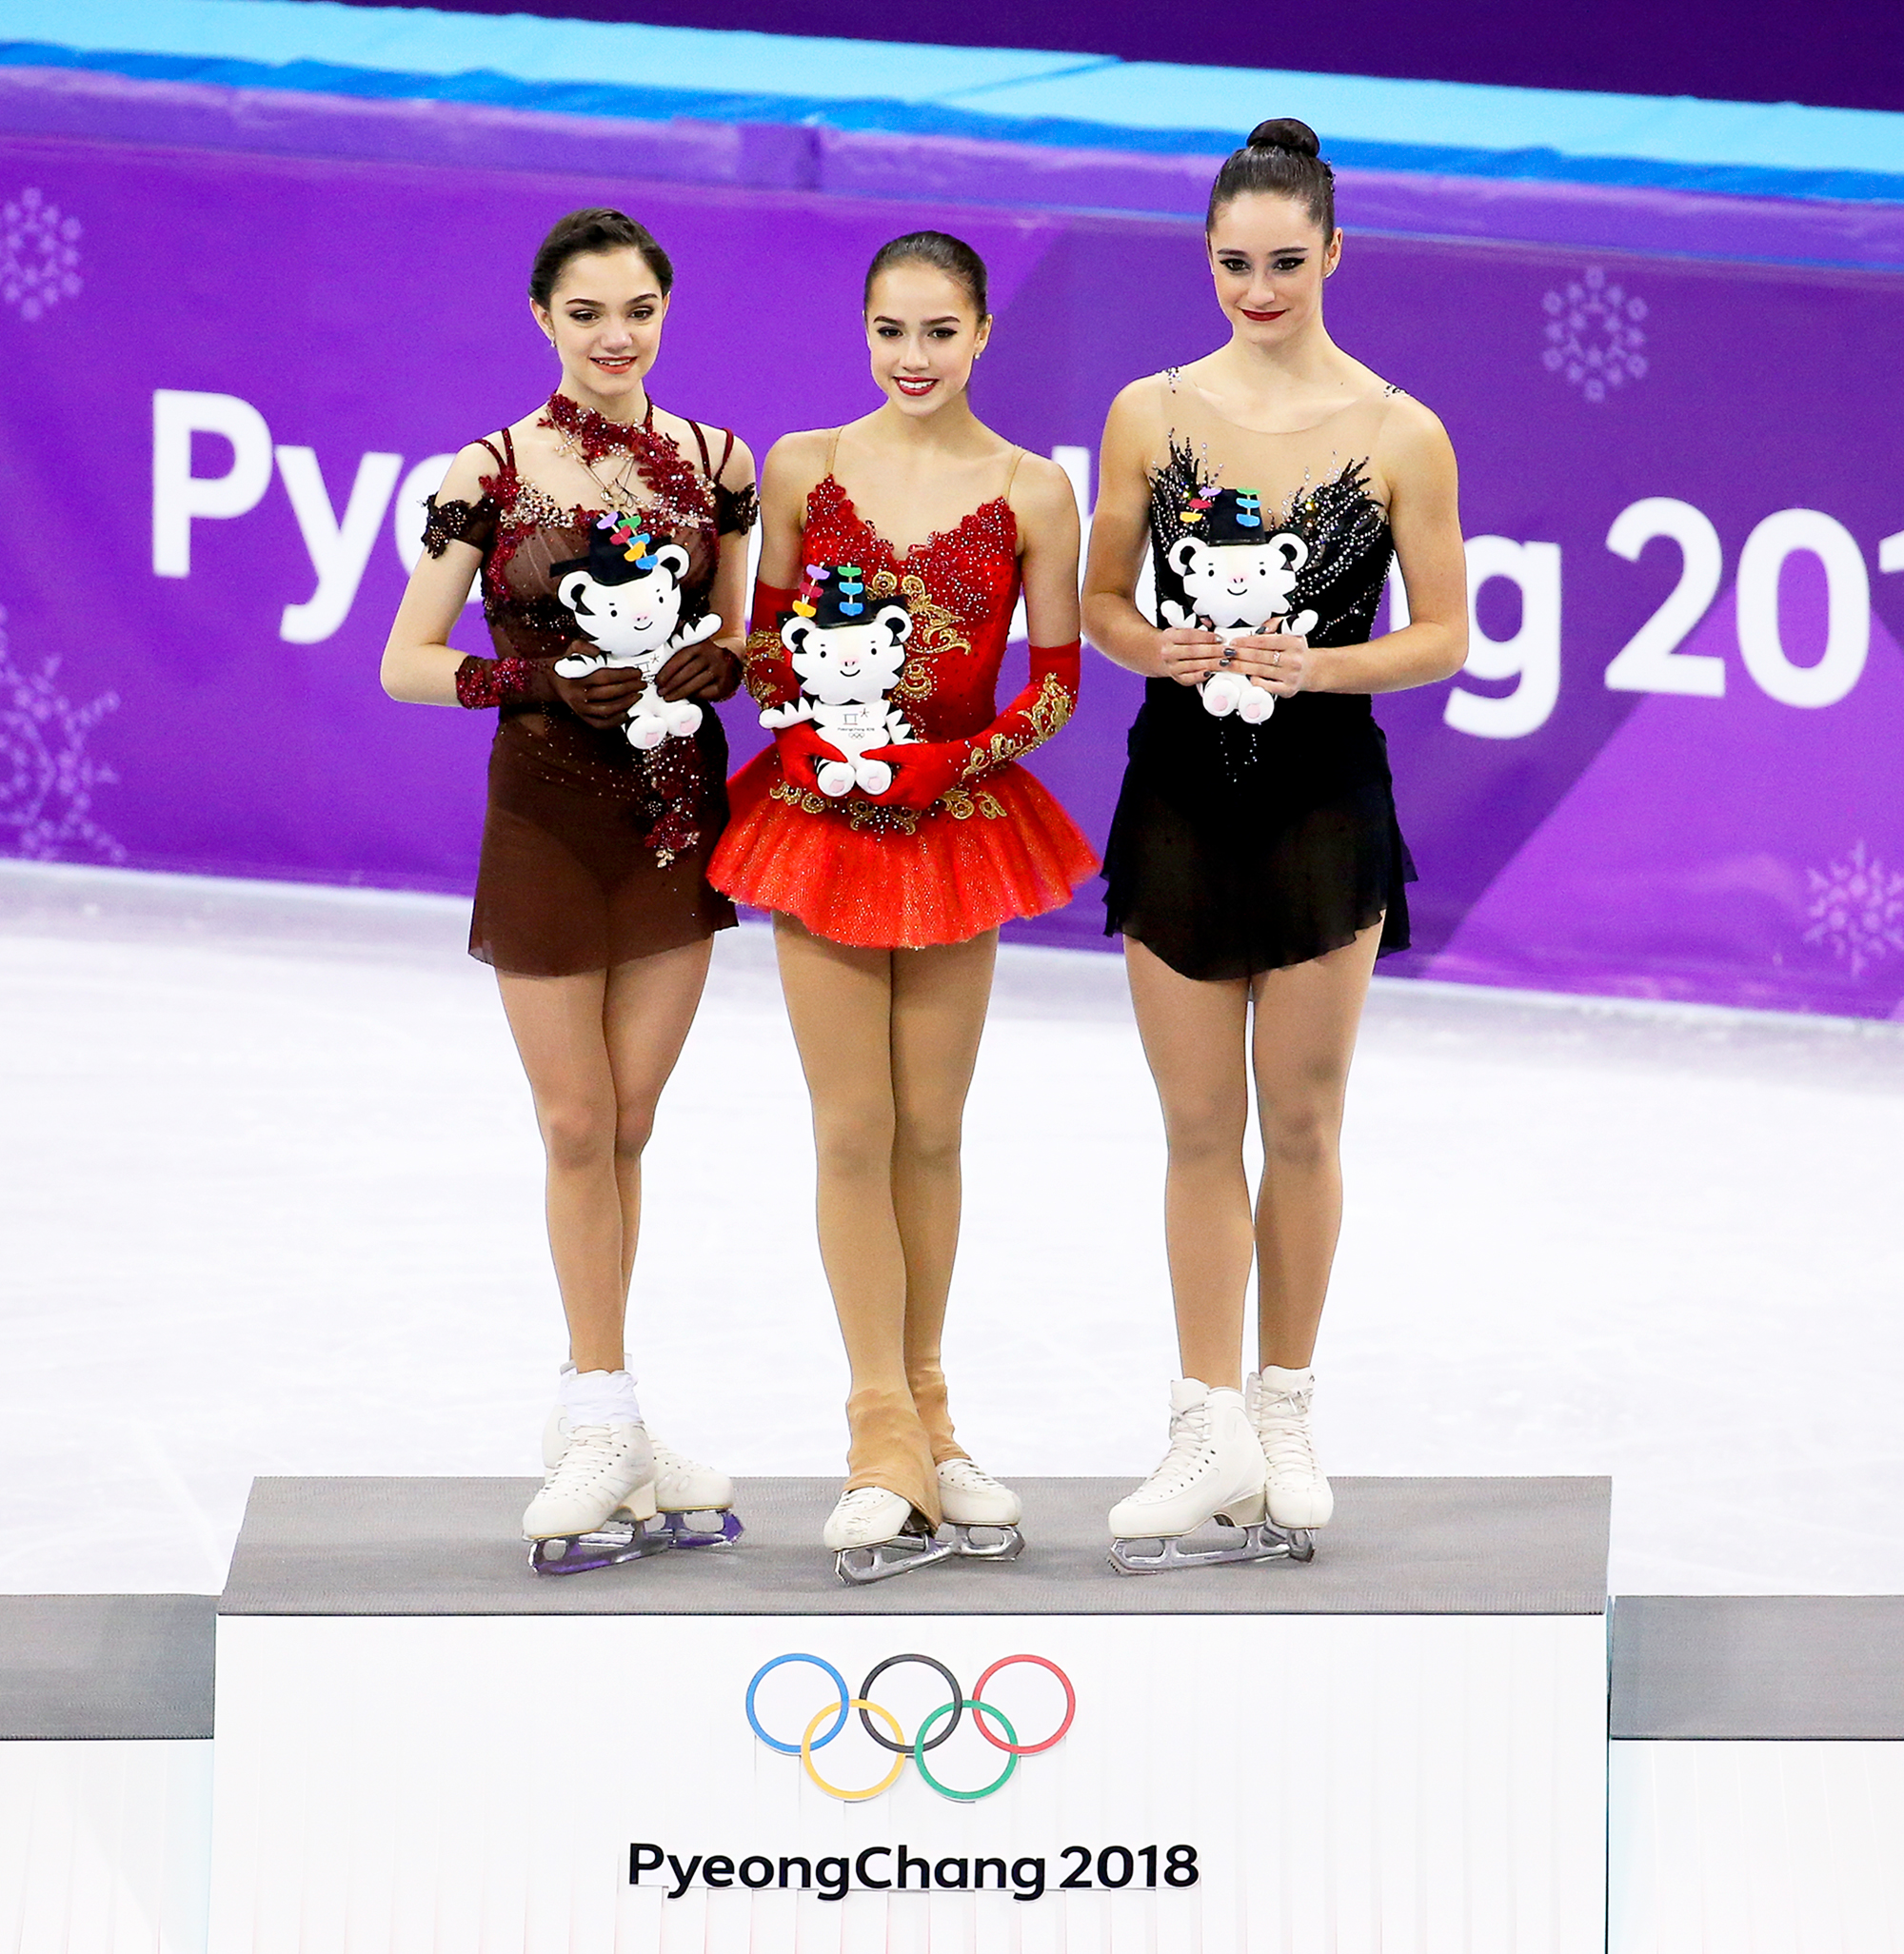 2018 New Ice Figure Skating Dress Figure skaitng Dress For Competition Black 